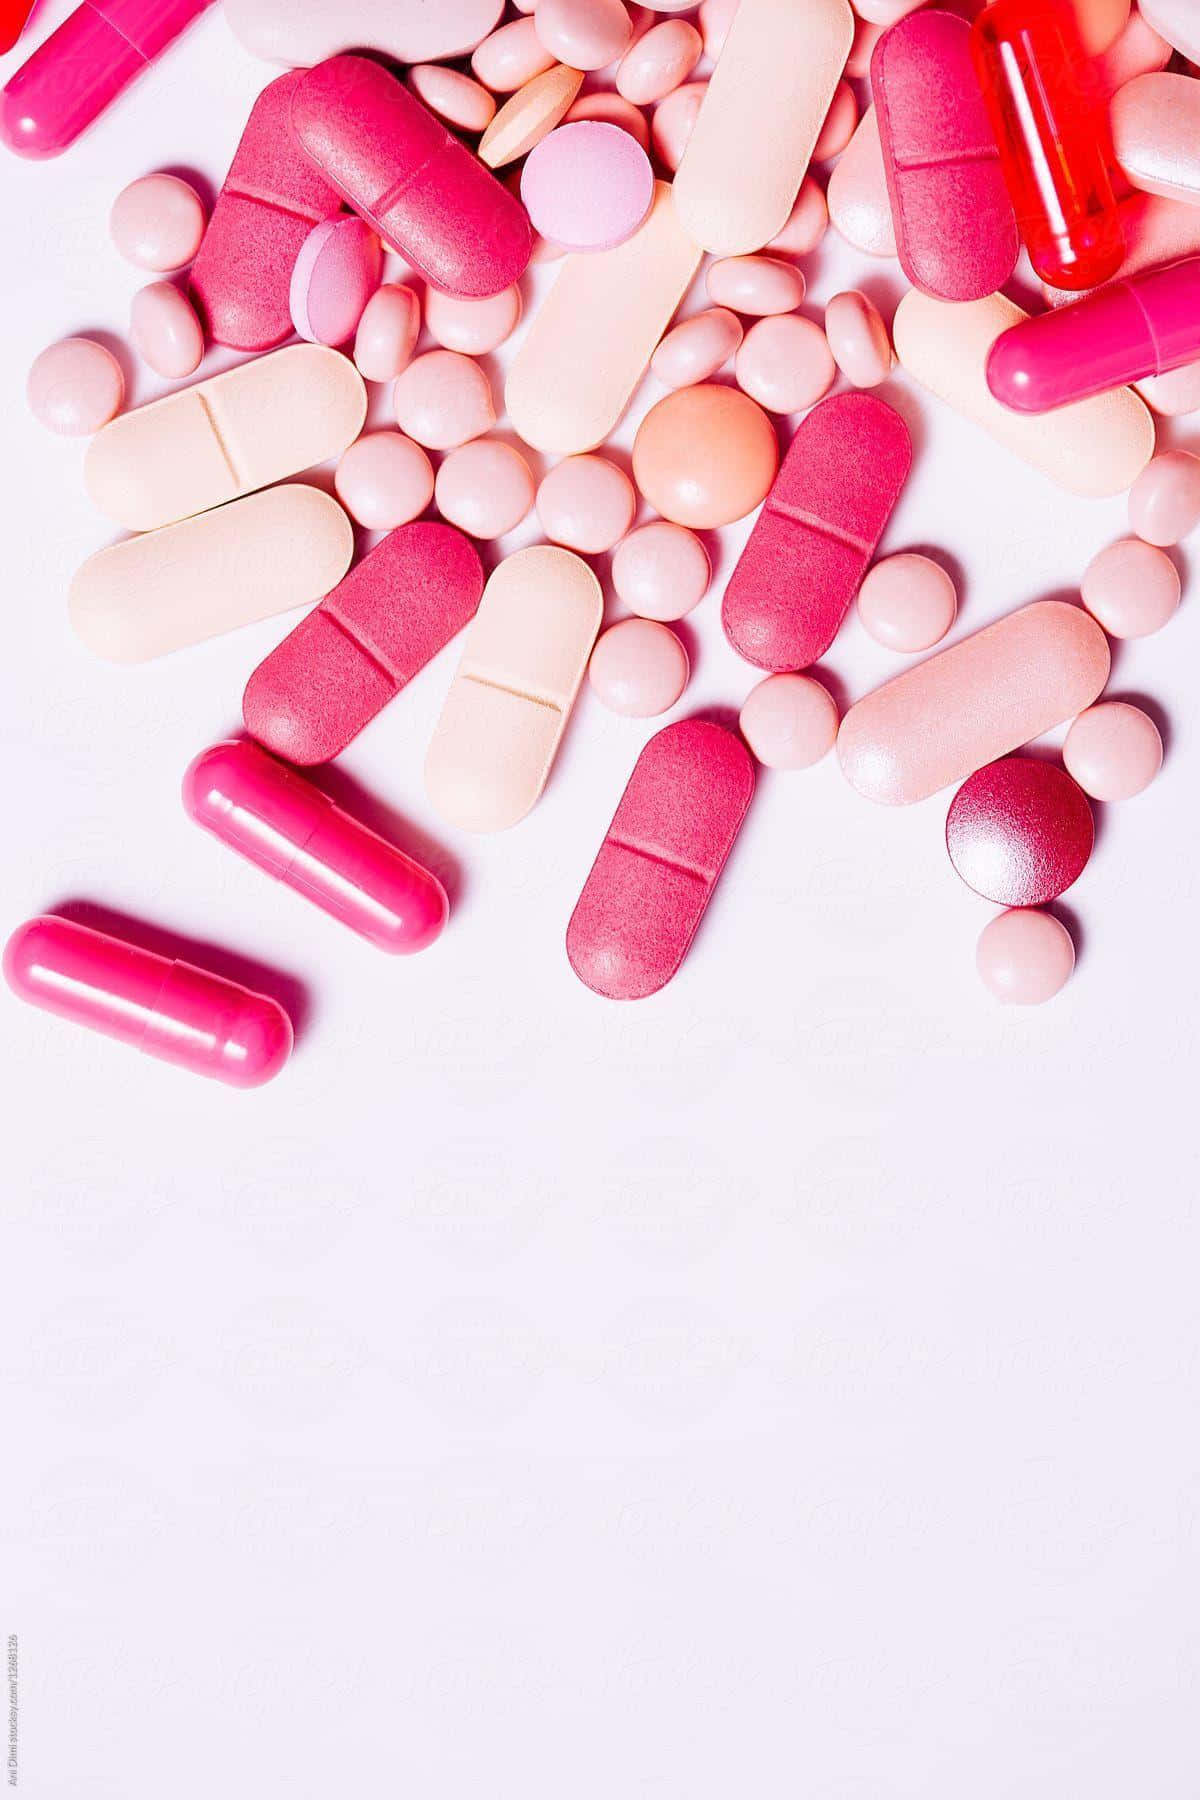 Assorted Pink Pillsand Capsules Wallpaper